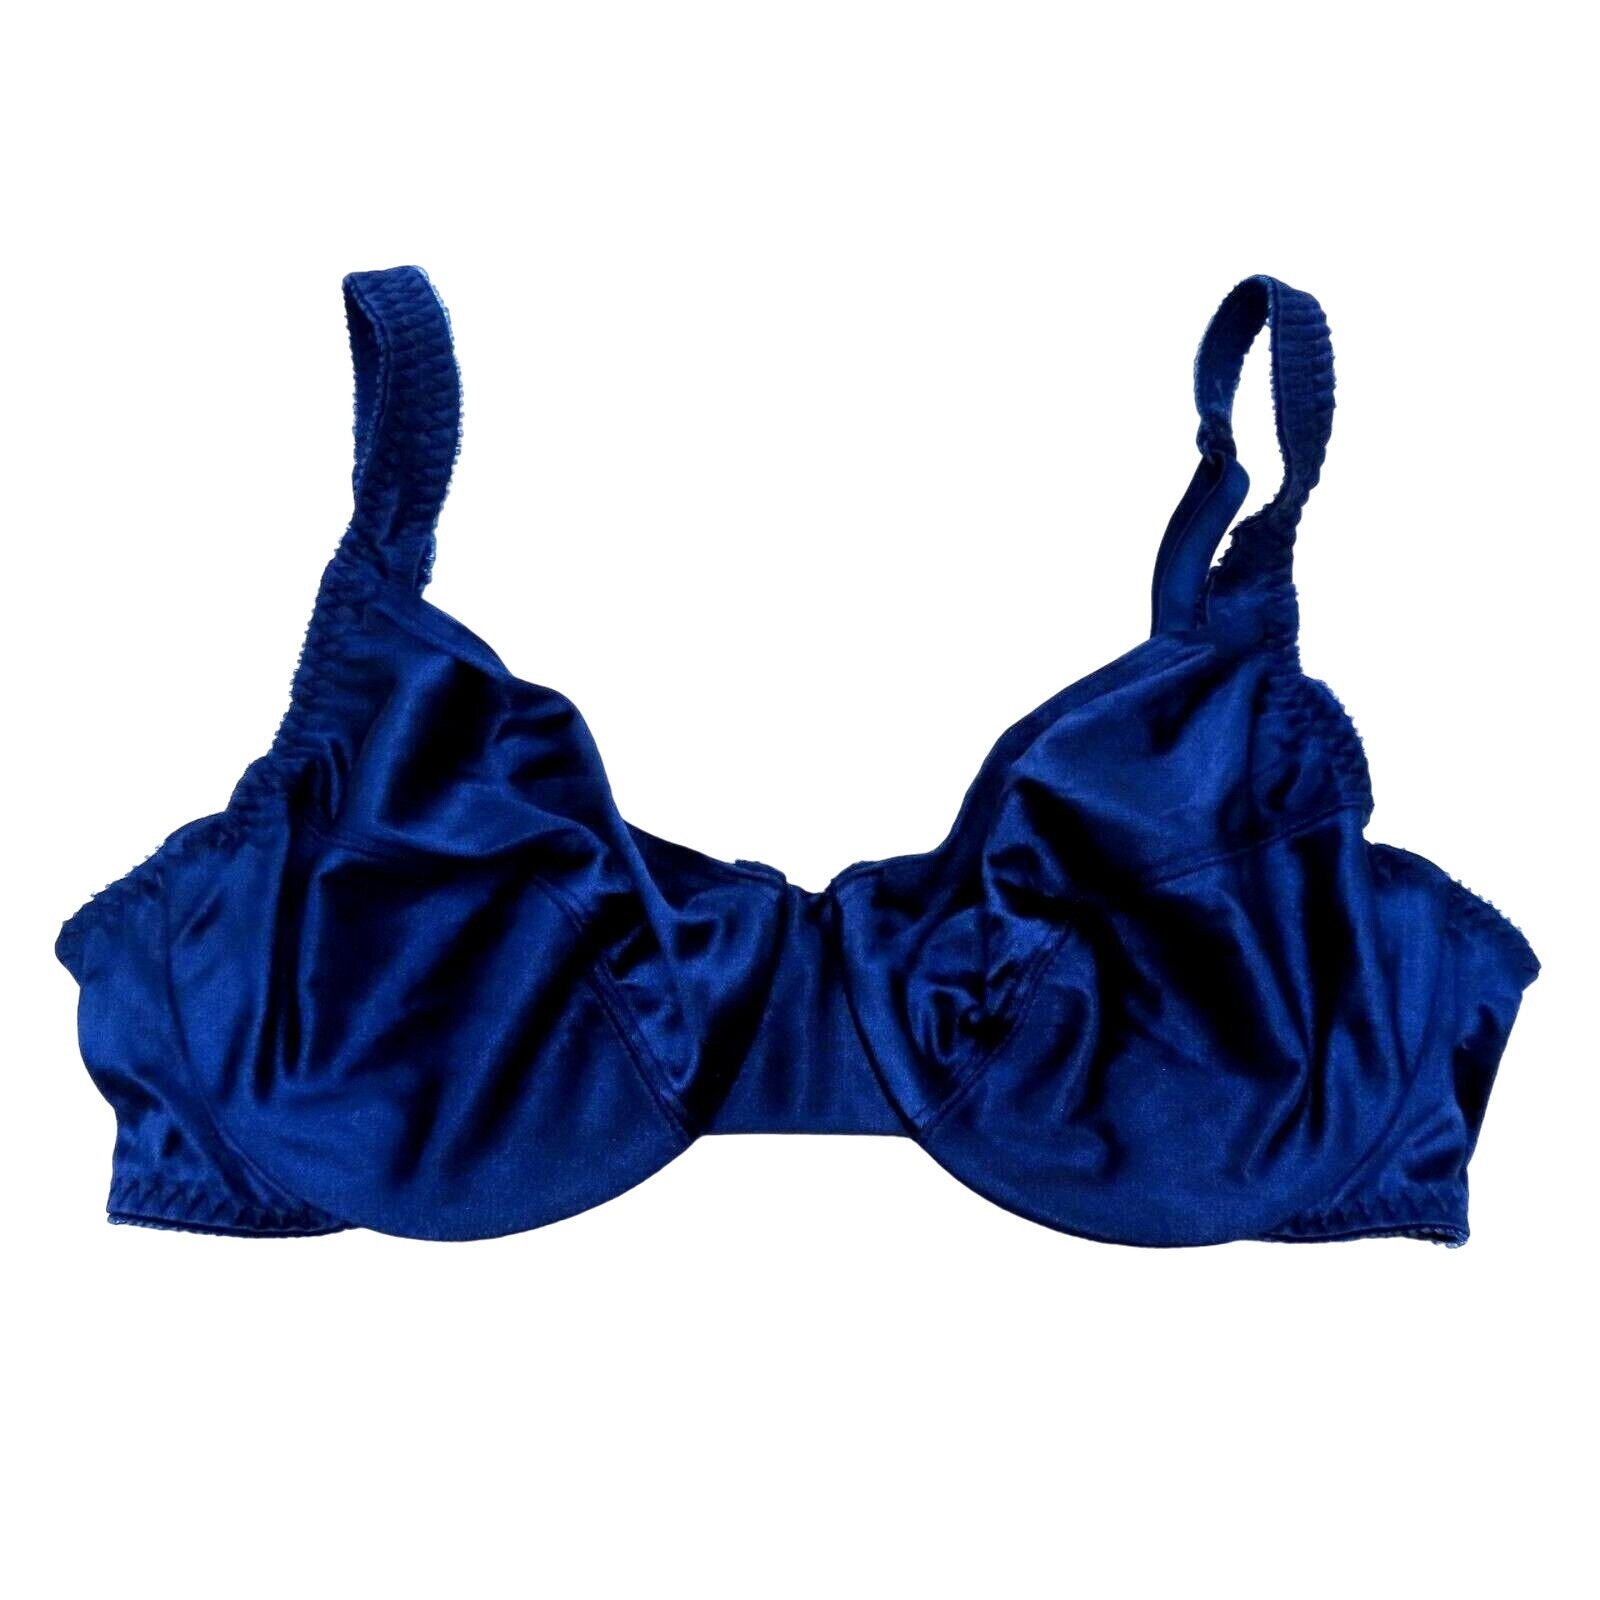 Blue Crossdressing Lingerie Satin Lace Bra for Men. Plus Size and